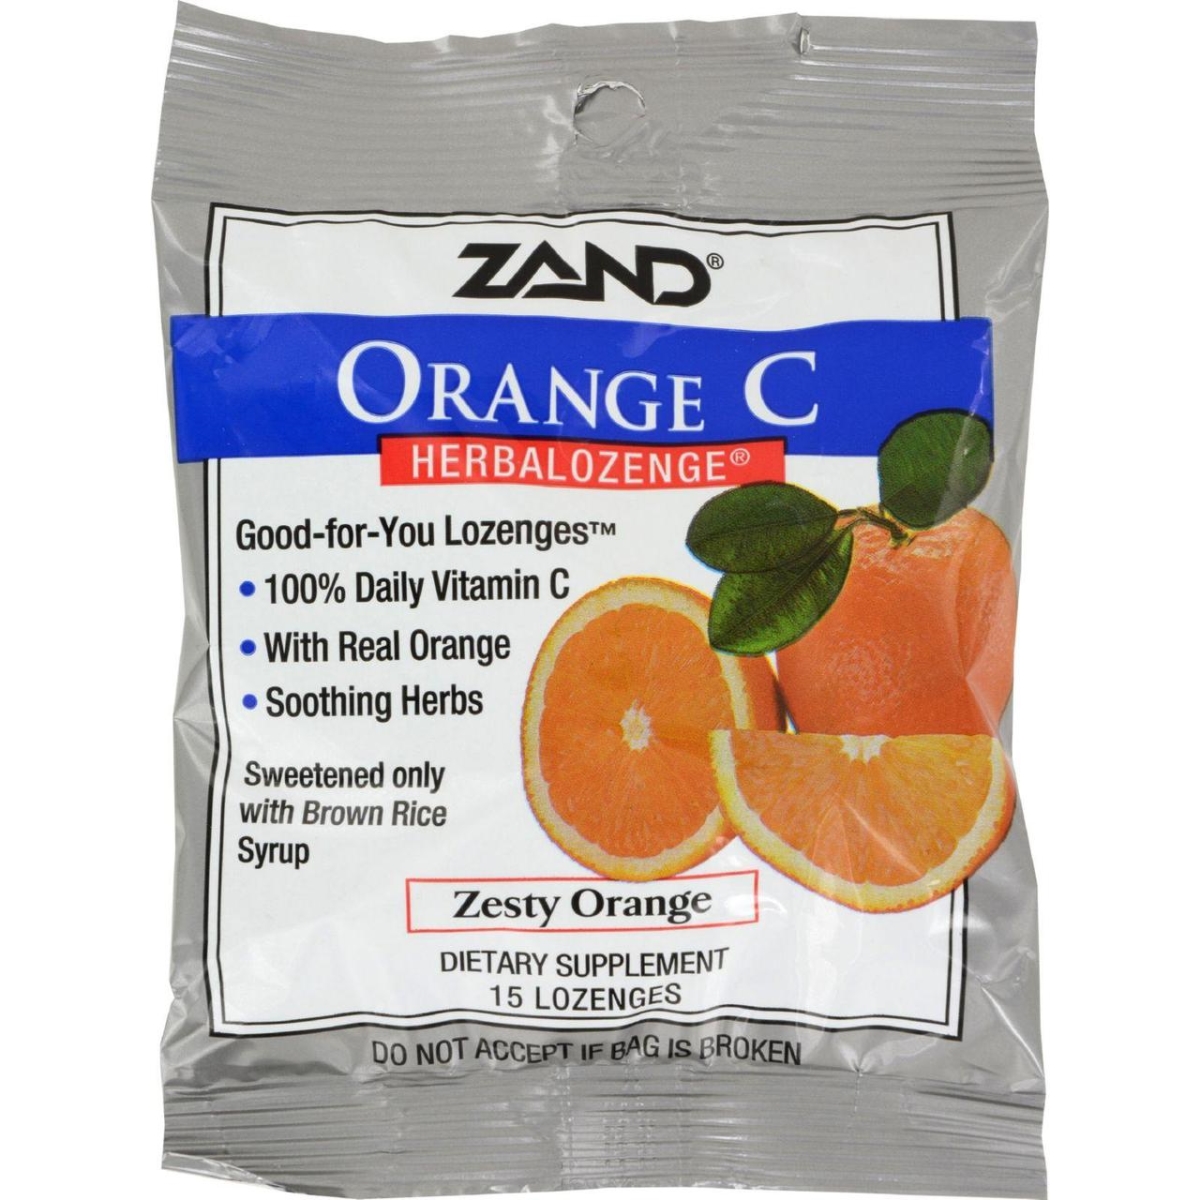 Hg0978254 Herbalozenge Orange C Natural Orange, 15 Lozenges - Case Of 12